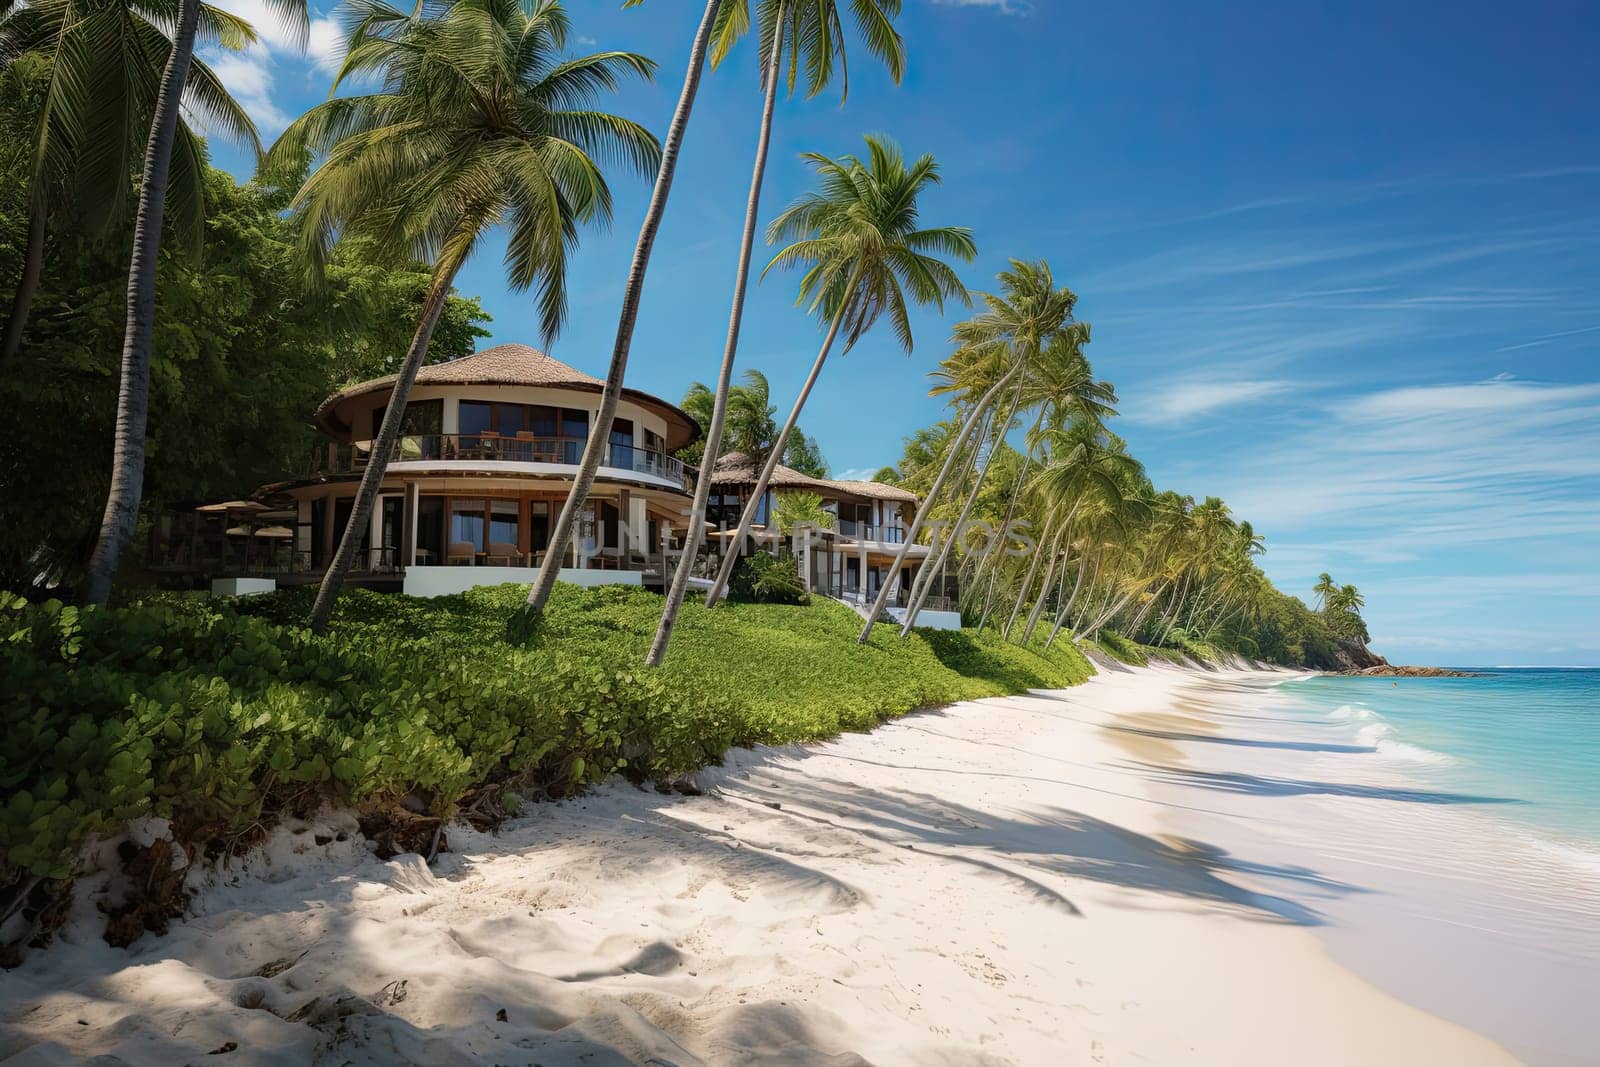 A Serene Beachscape with Majestic Palm Trees and a Quaint Coastal House Created With Generative AI Technology